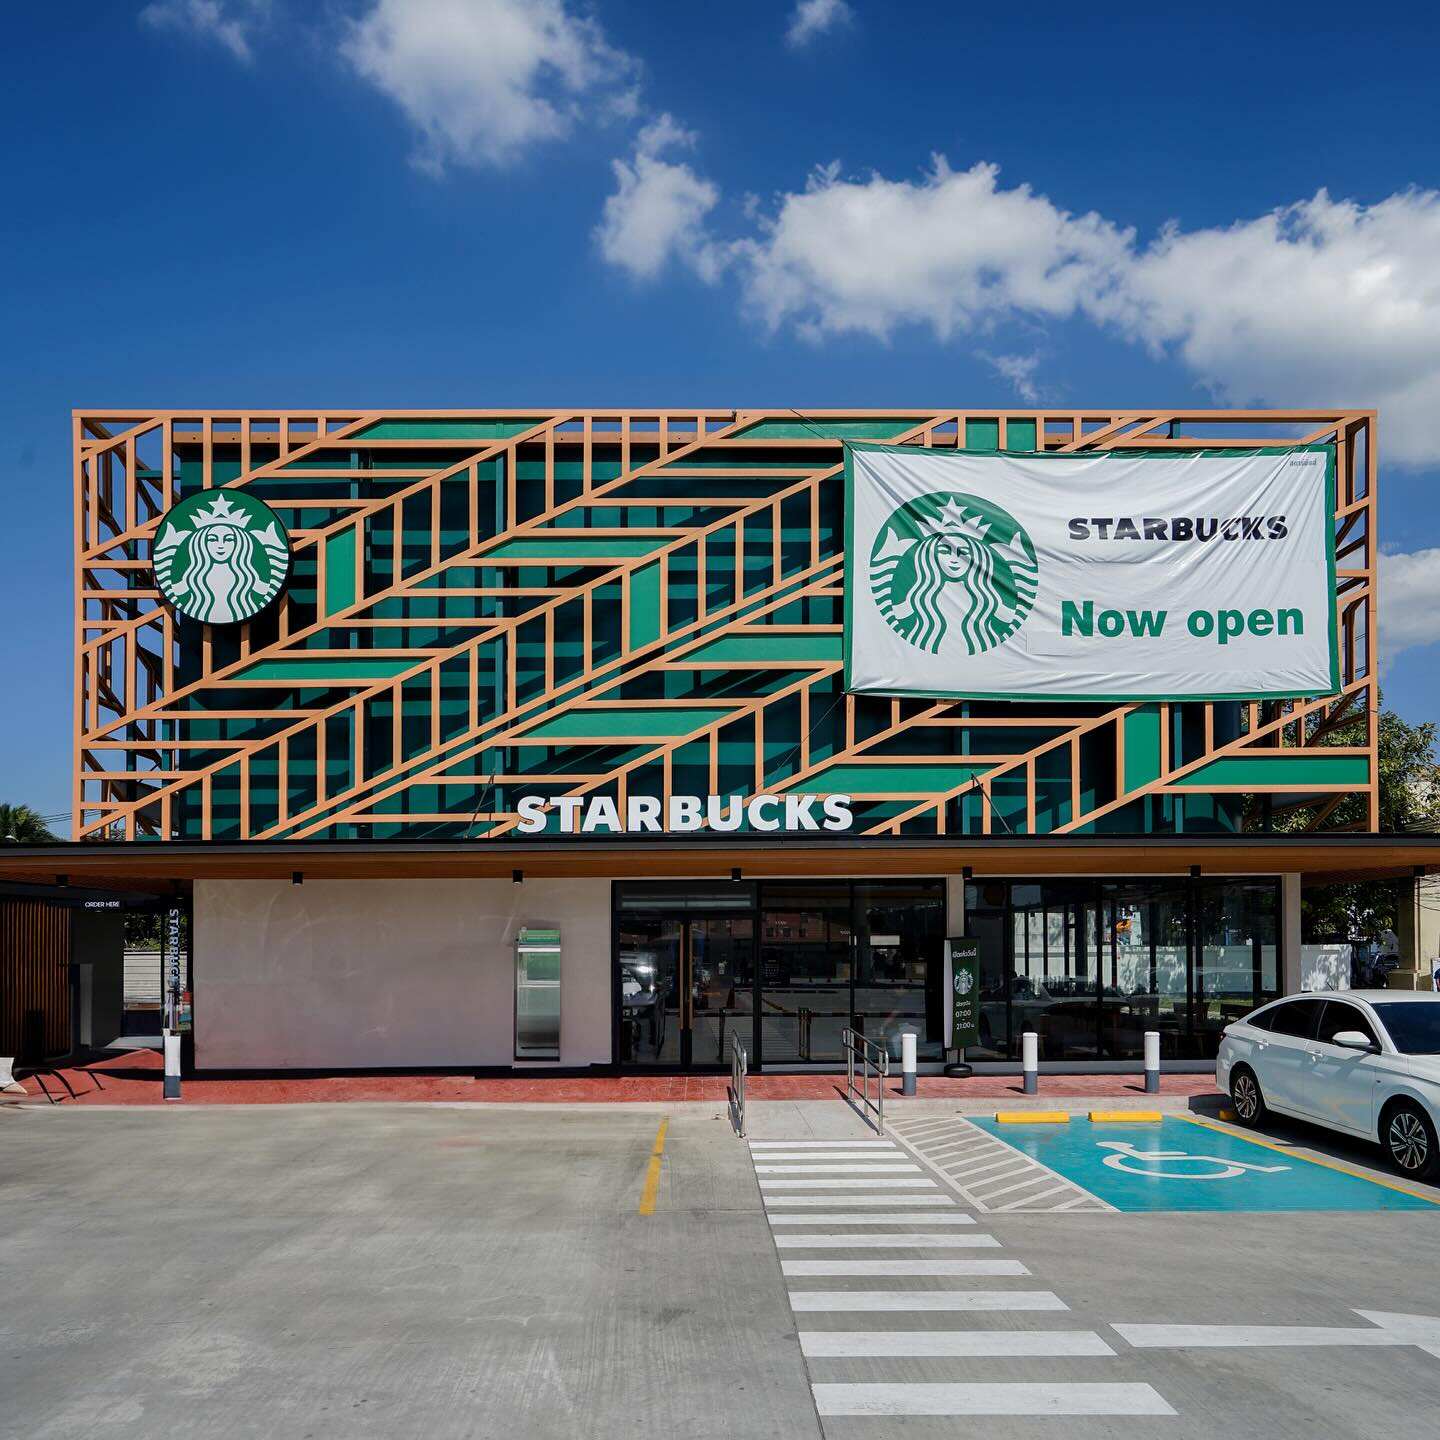 Starbucks, Tajlandia